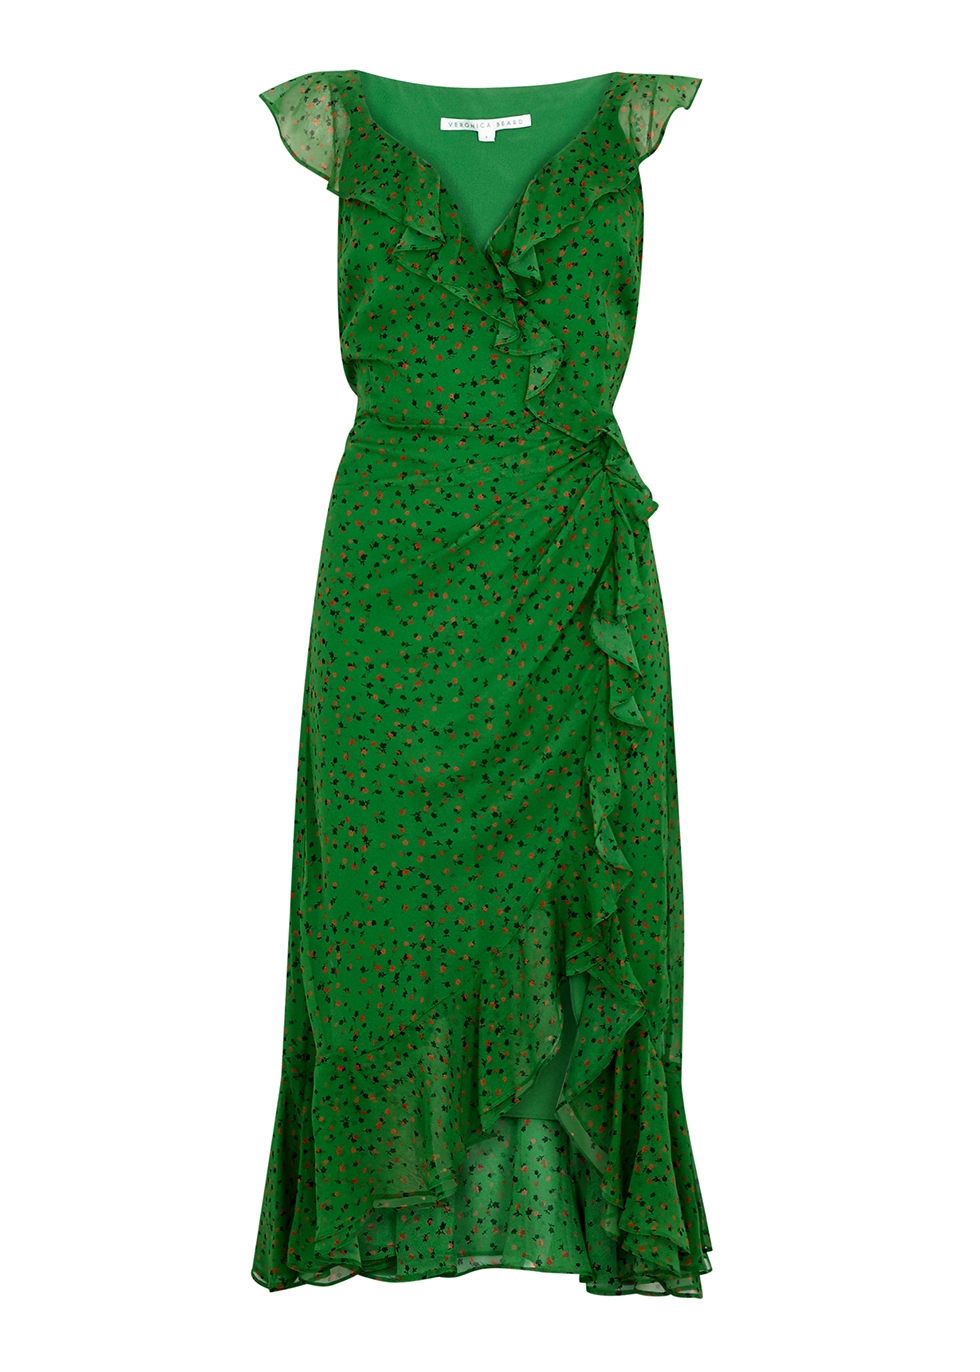 veronica beard green dress